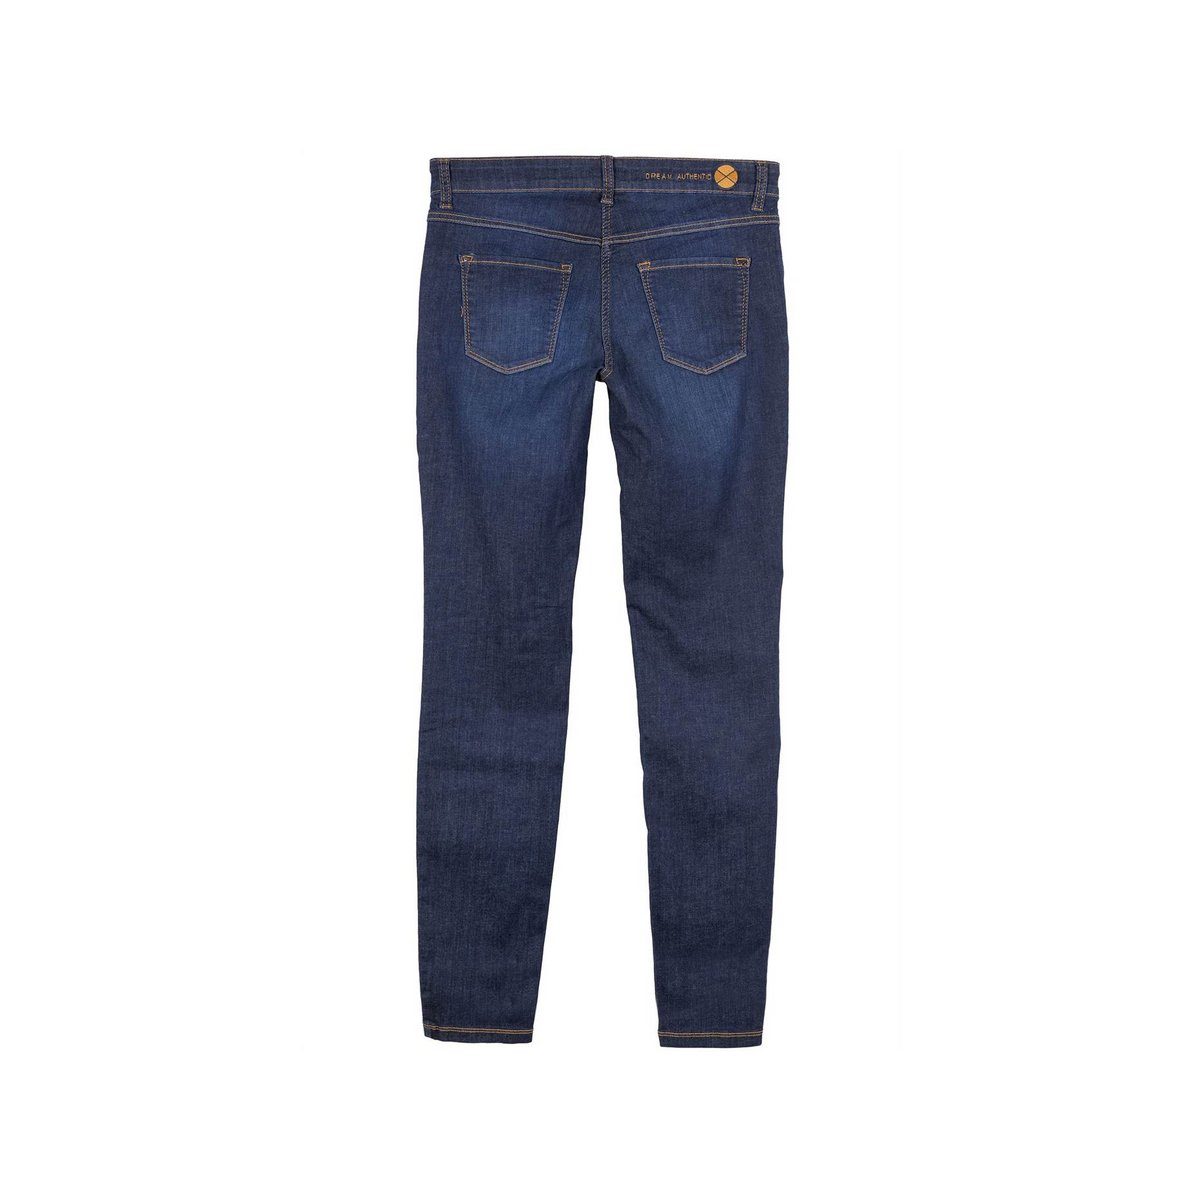 (1-tlg) 5-Pocket-Jeans blau MAC